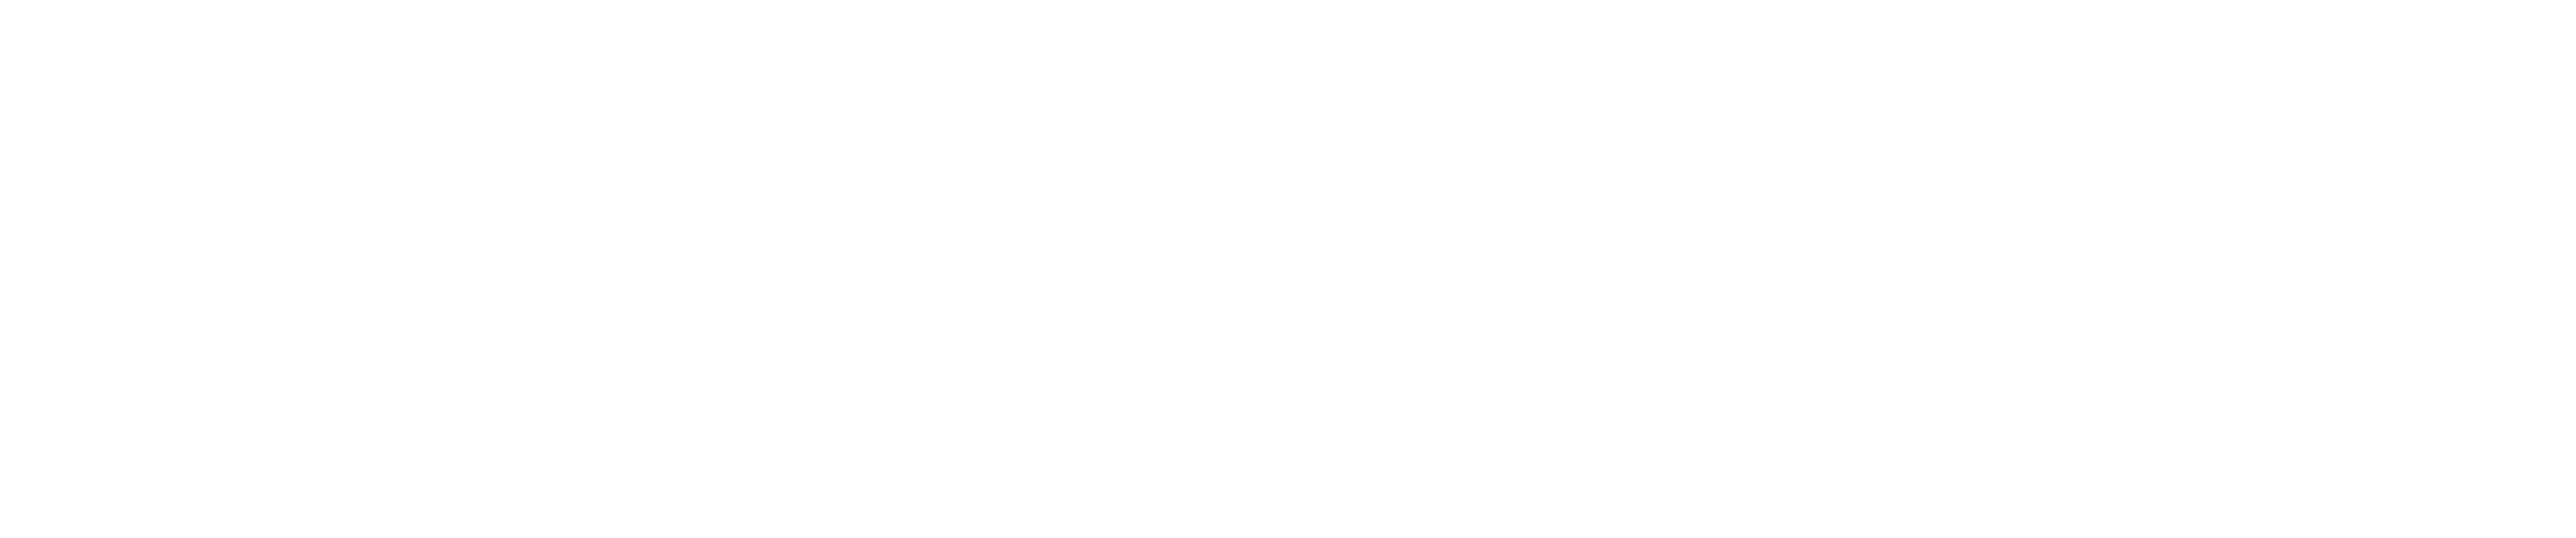 across rpgsea logo